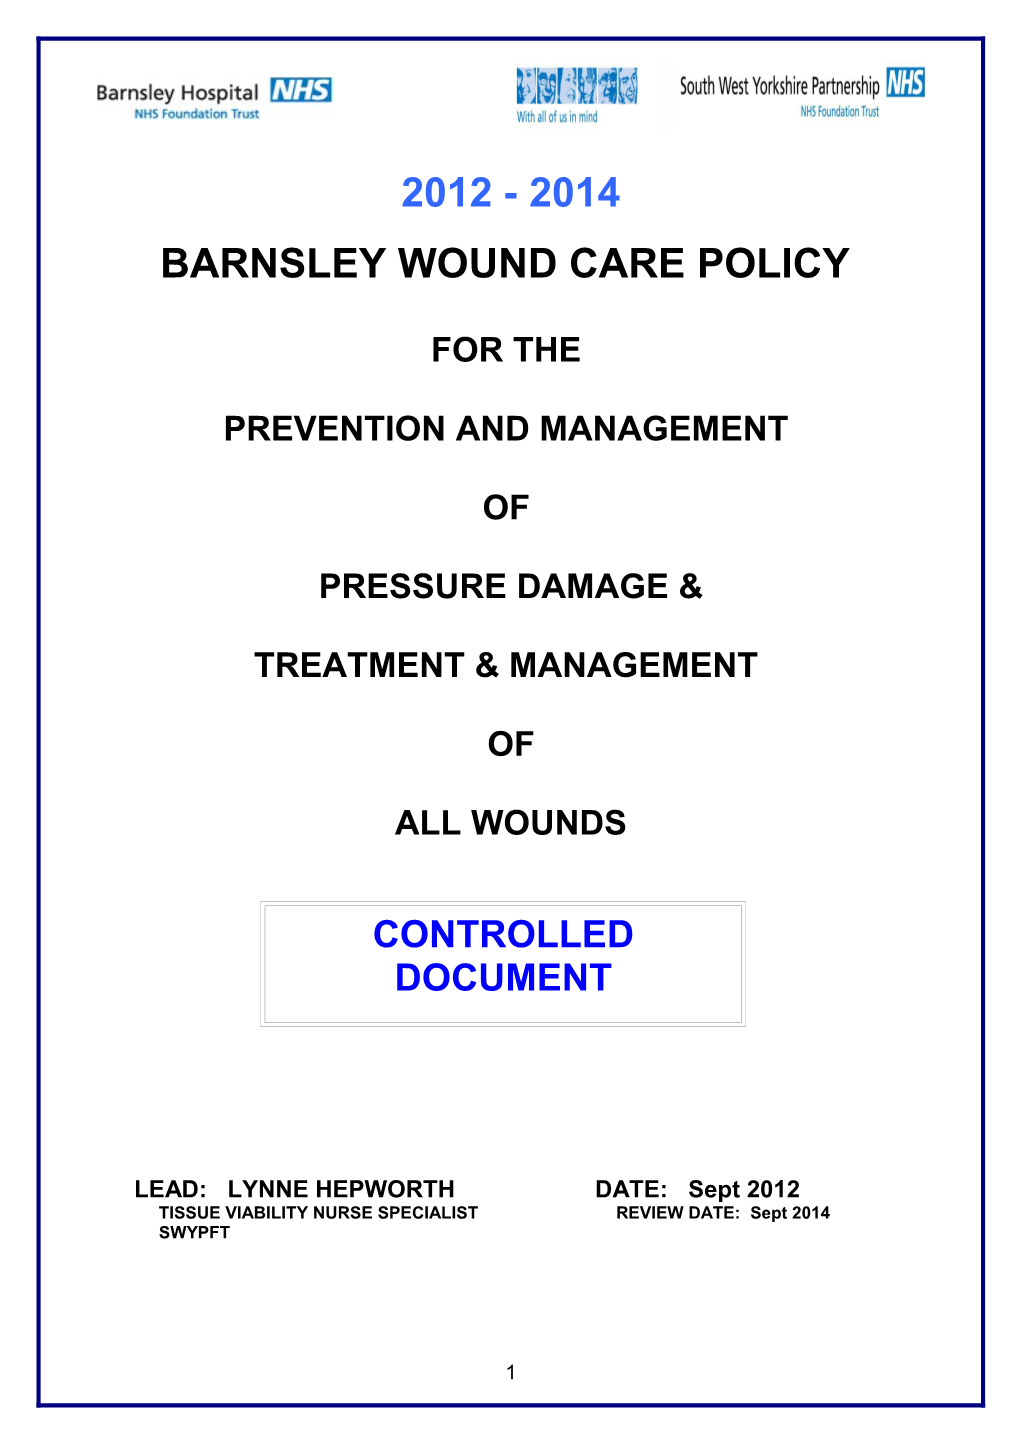 Barnsley Wound Care Policy